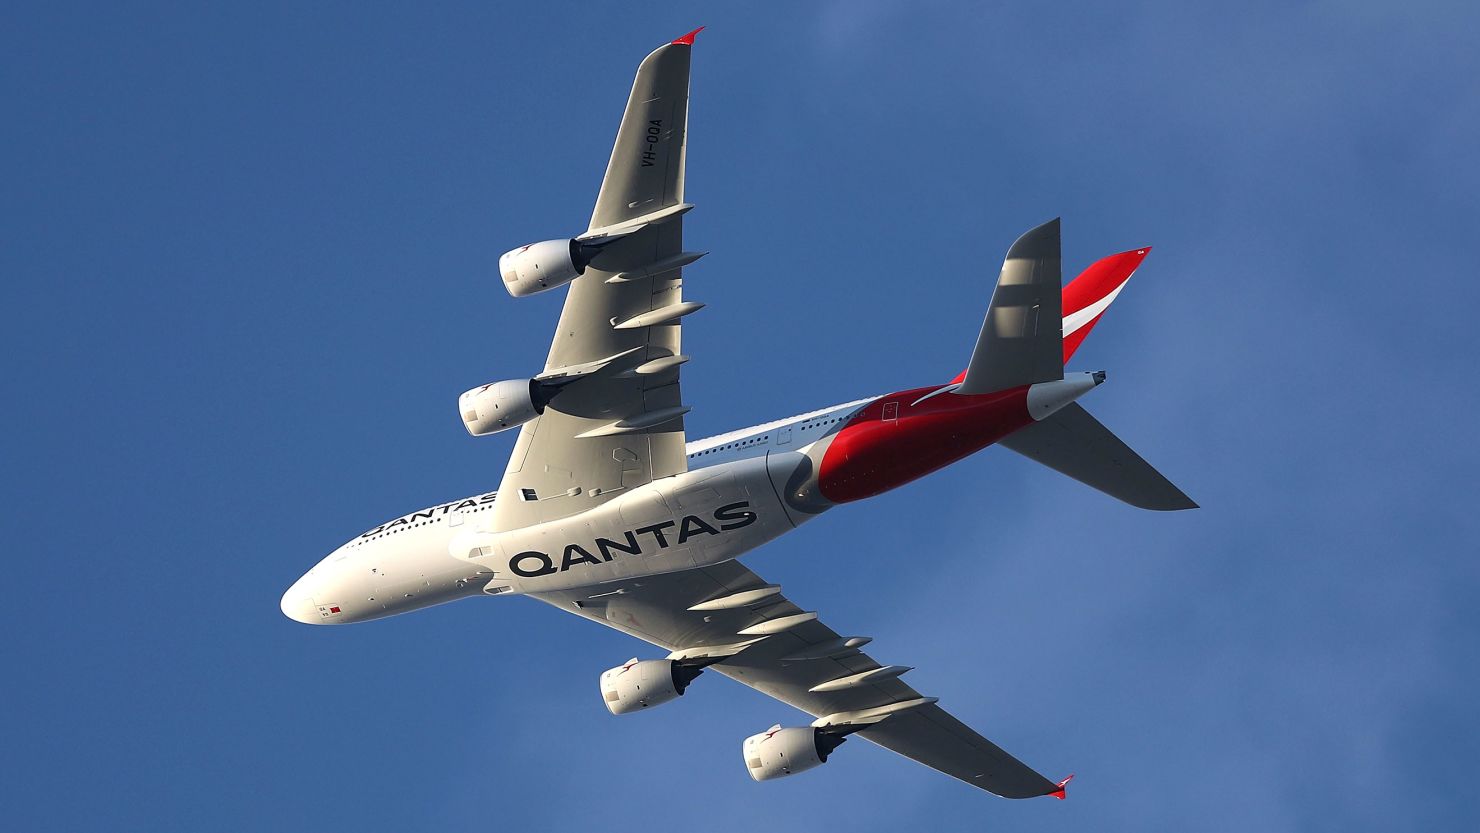 A Qantas Airbus A380 on August 18, 2018 in Sydney, Australia.